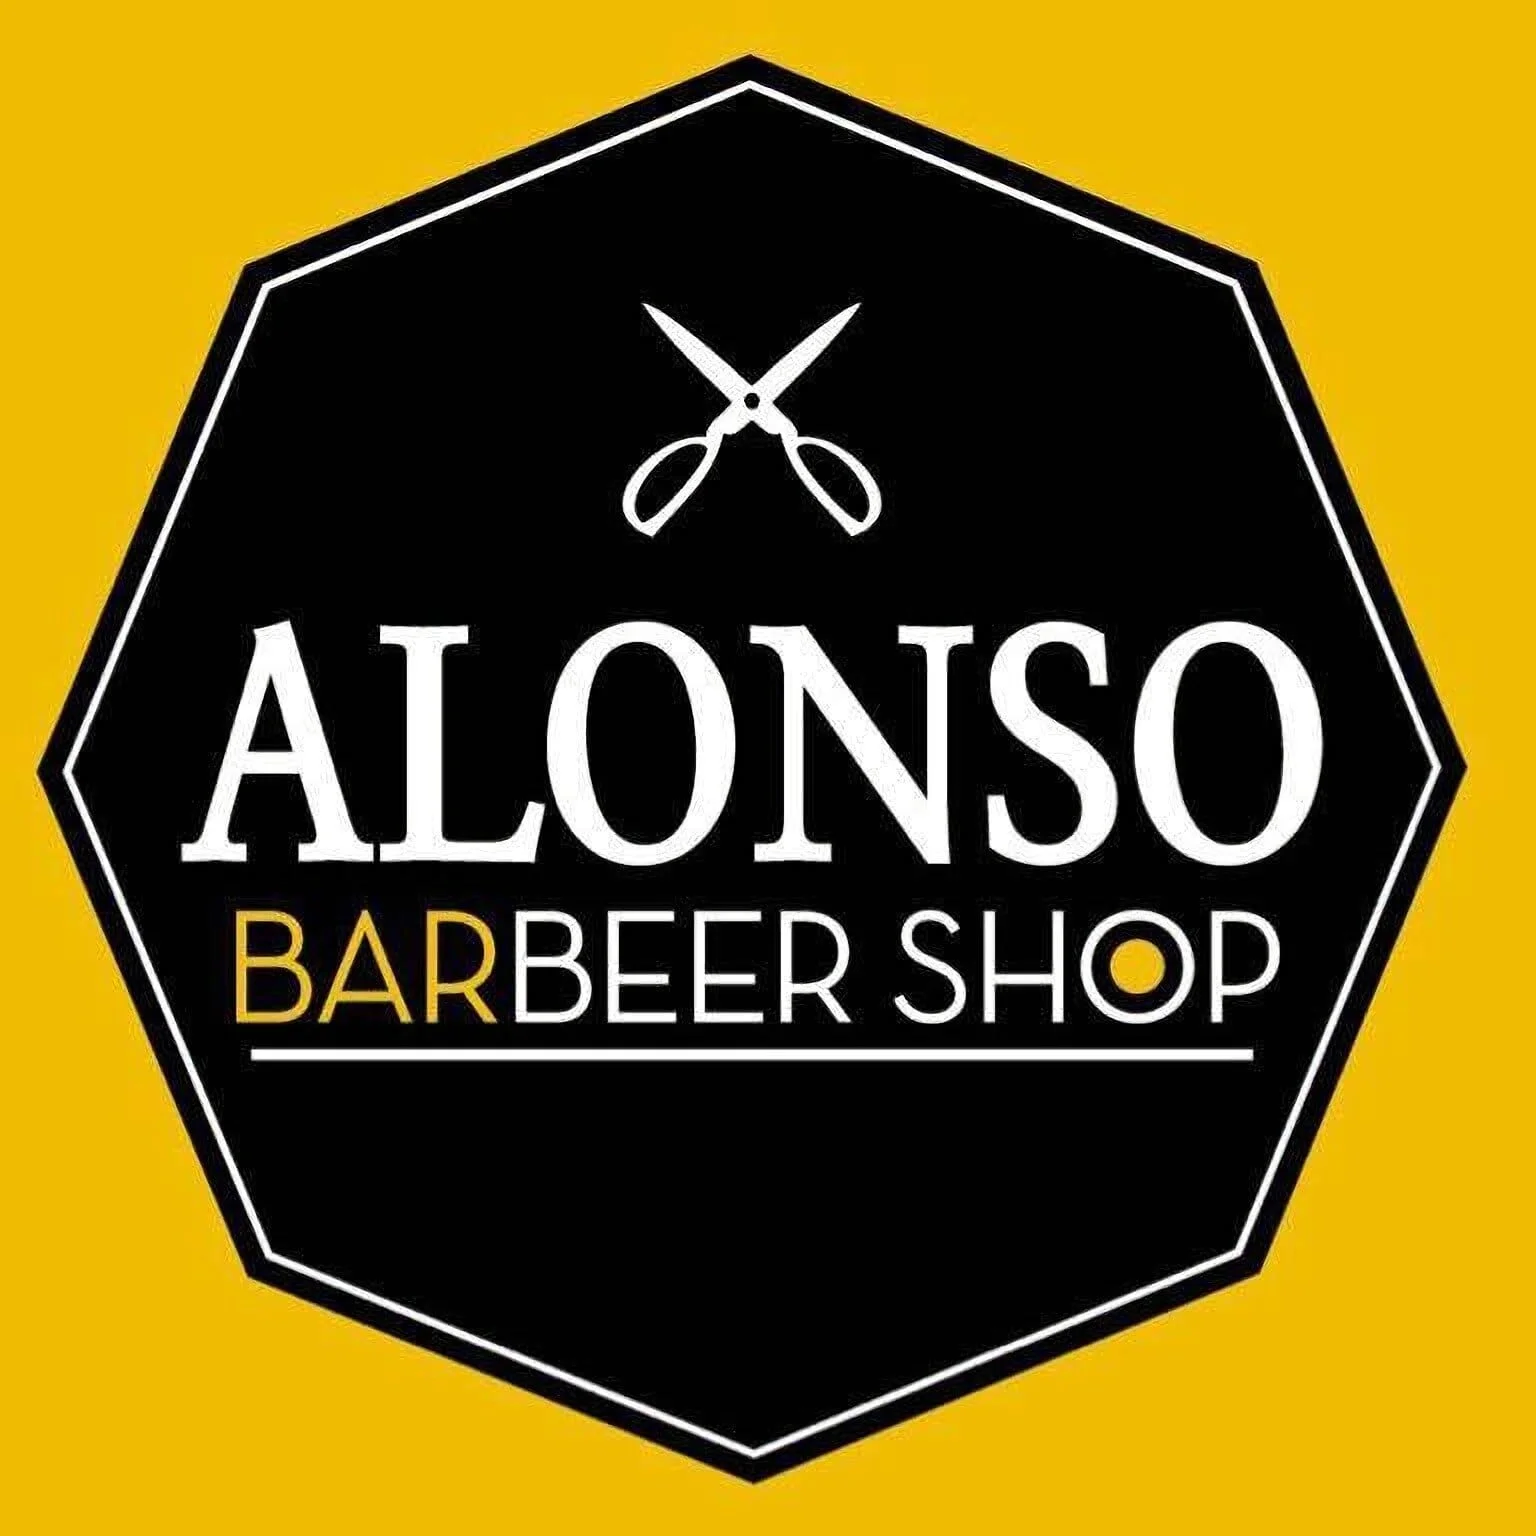 Barbería-alonso-barber-shop-12054